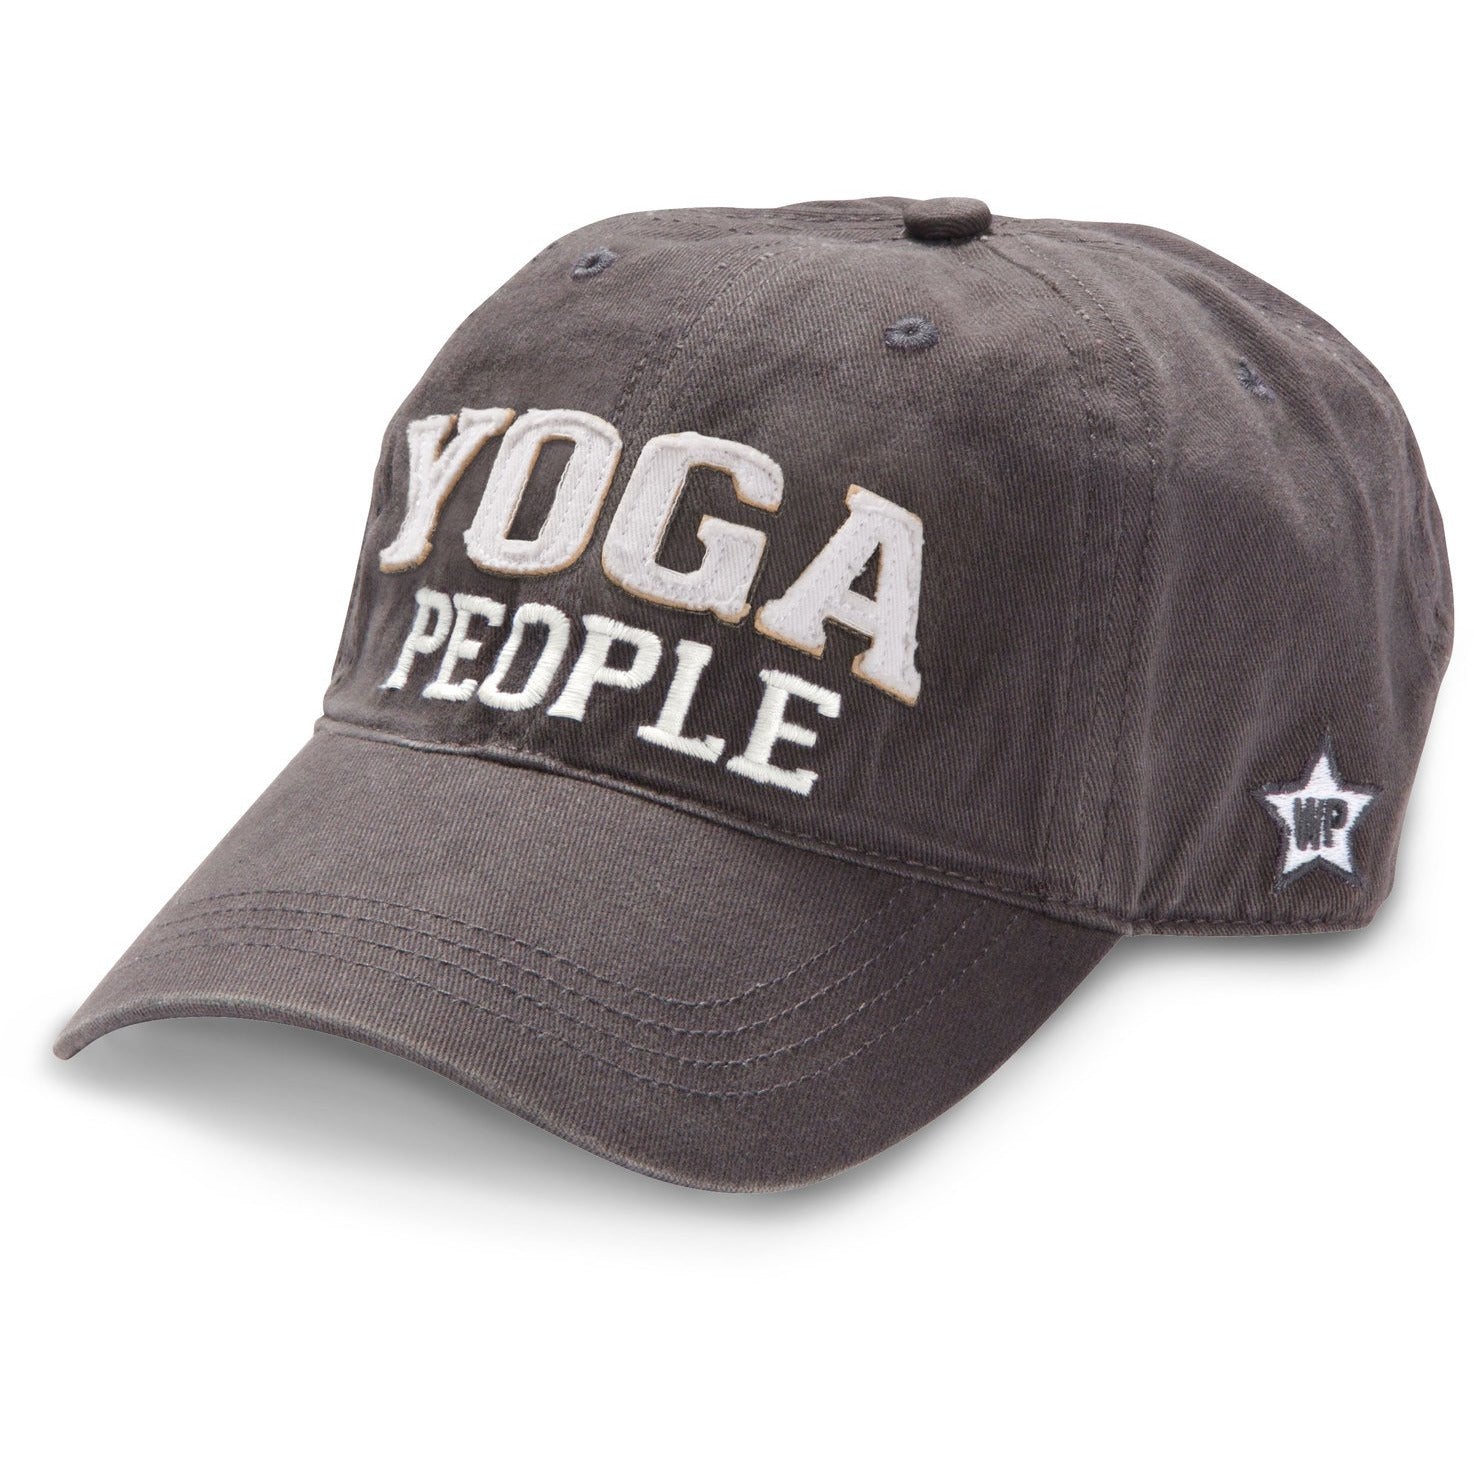 Yoga People Hat